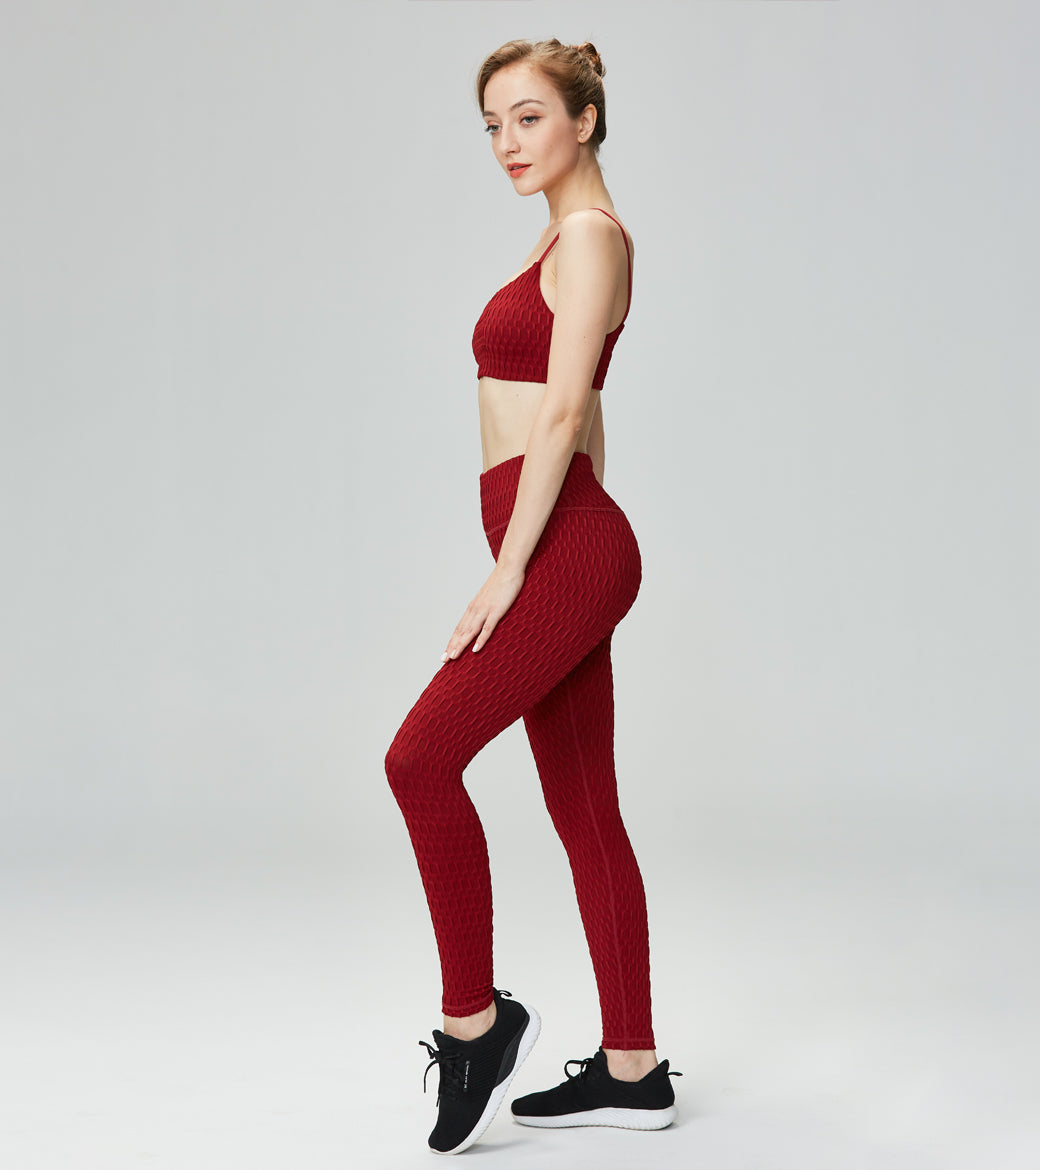 LOVESOFT Women's Red Jacquard Bubble Sport Yoga Sports Suit